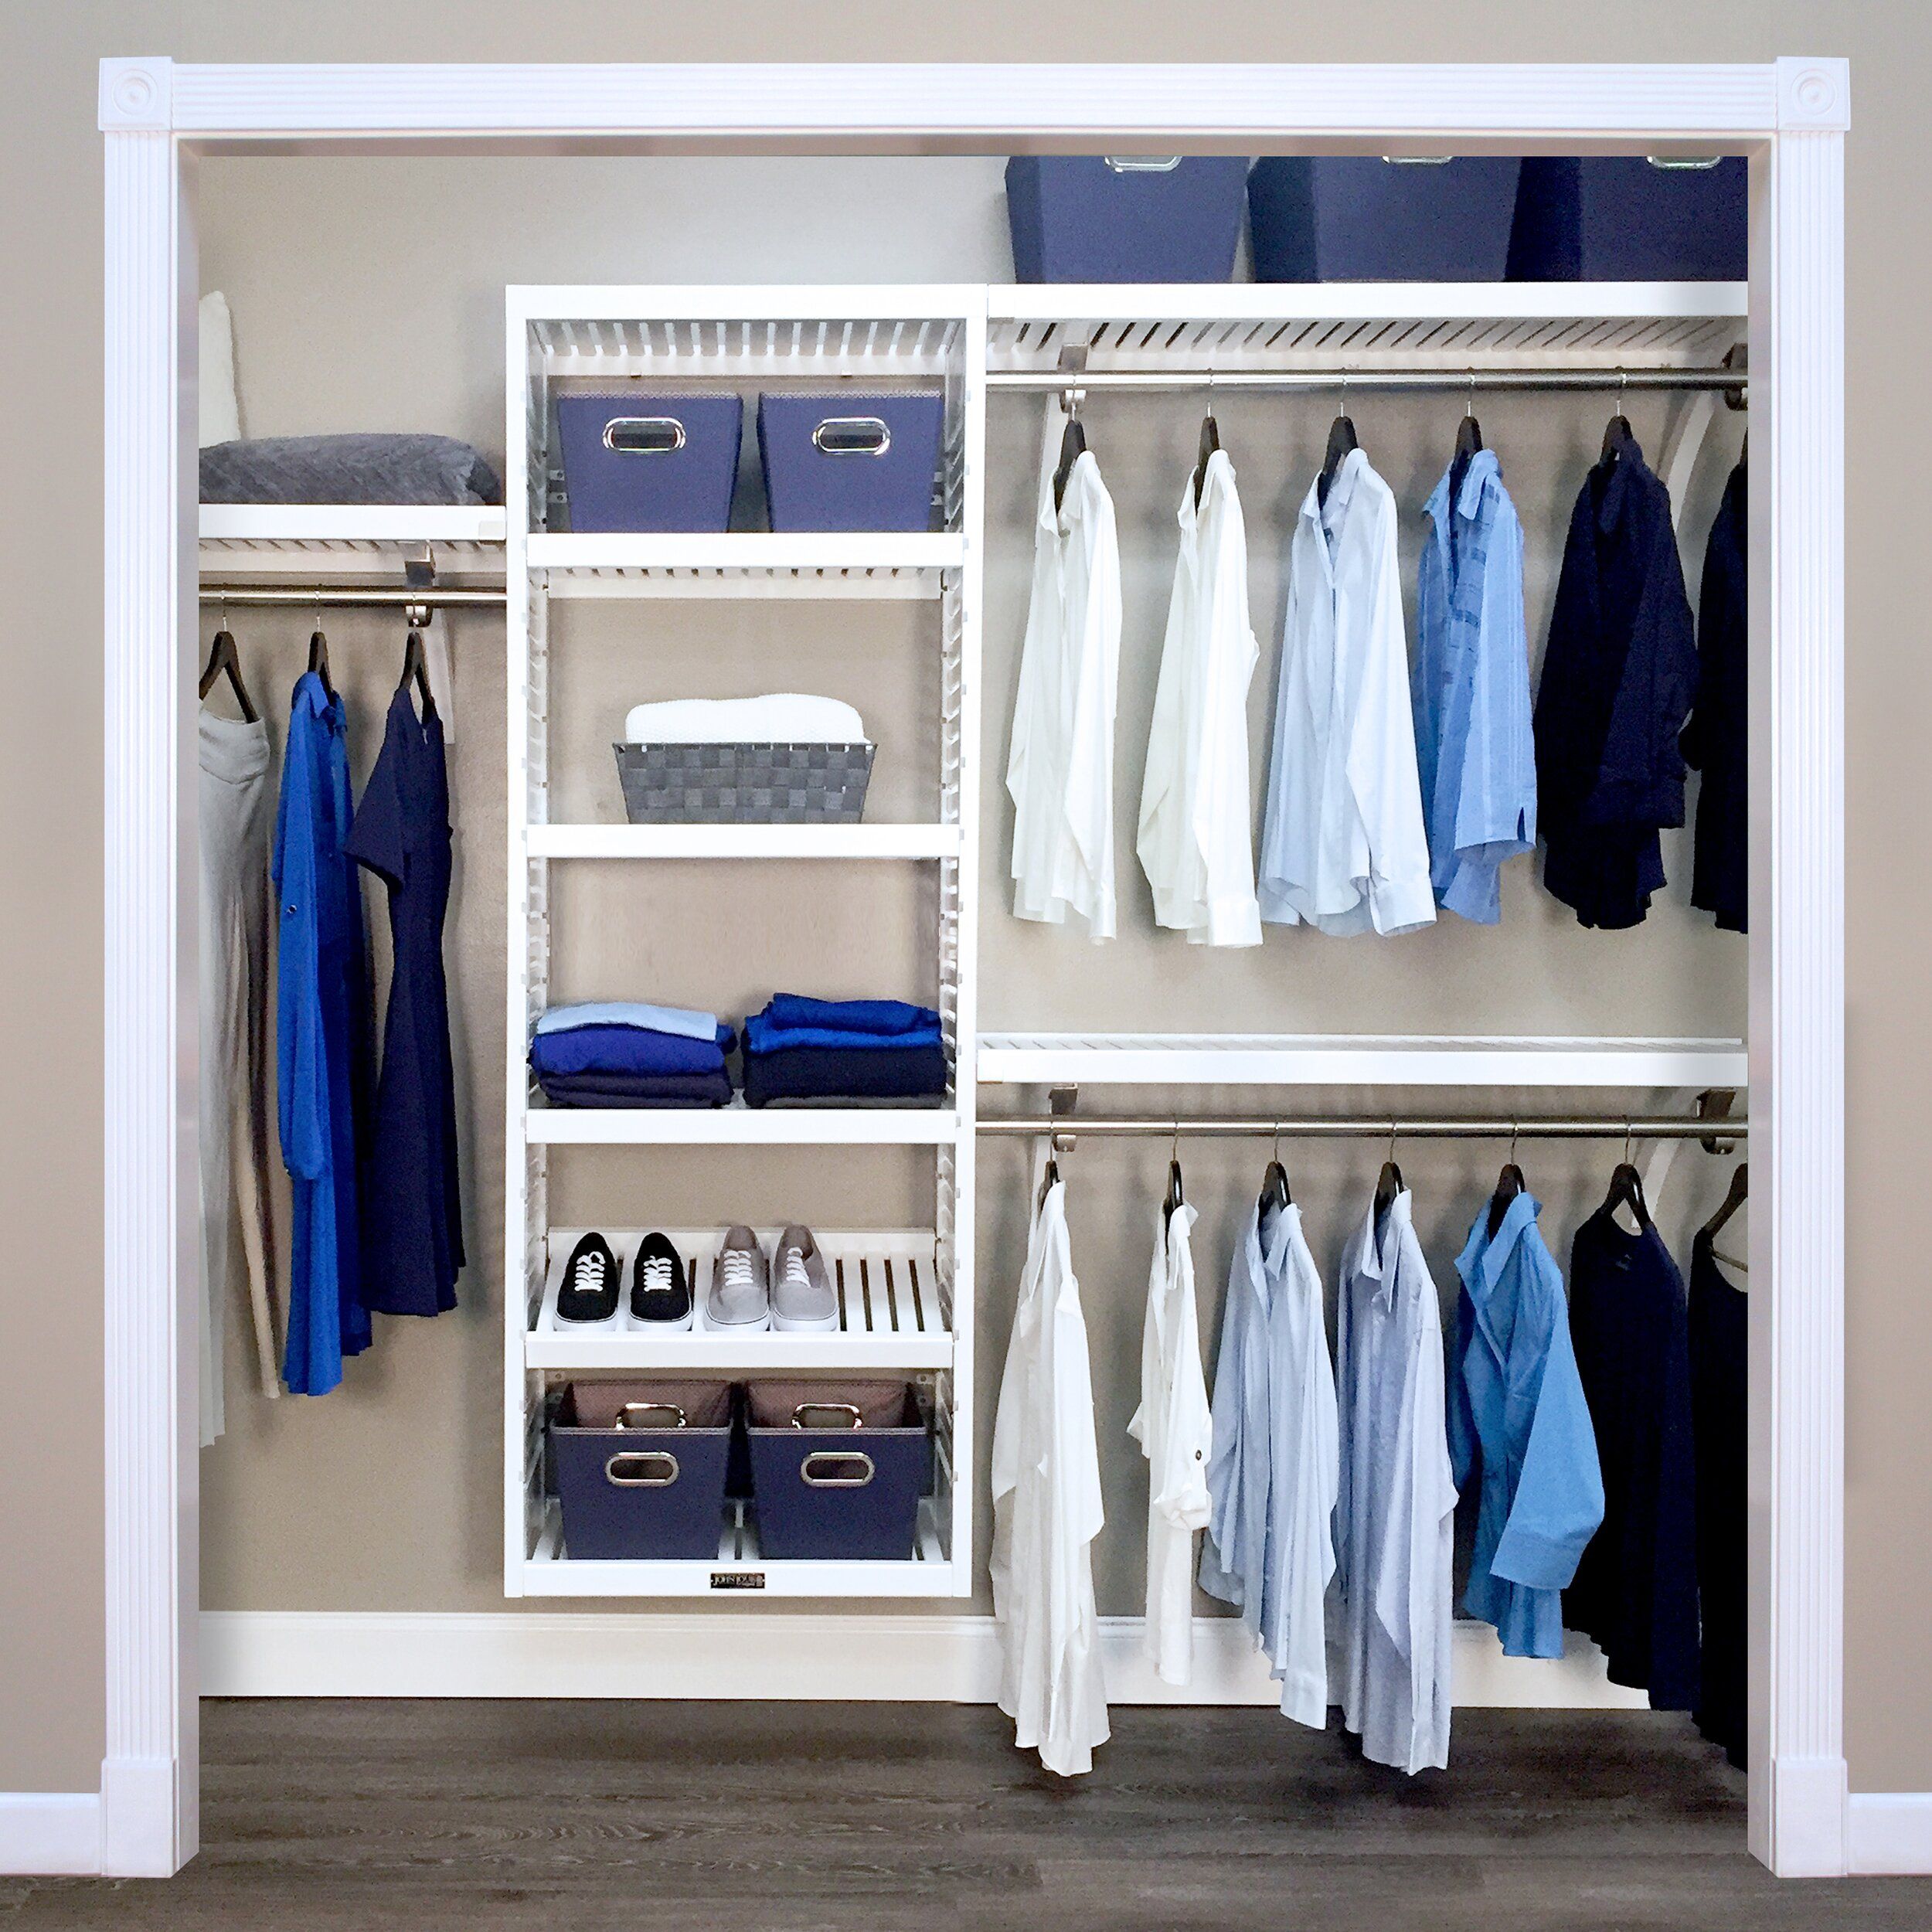 Clothes storage ideas – 12 ways to stash what you wear neatly